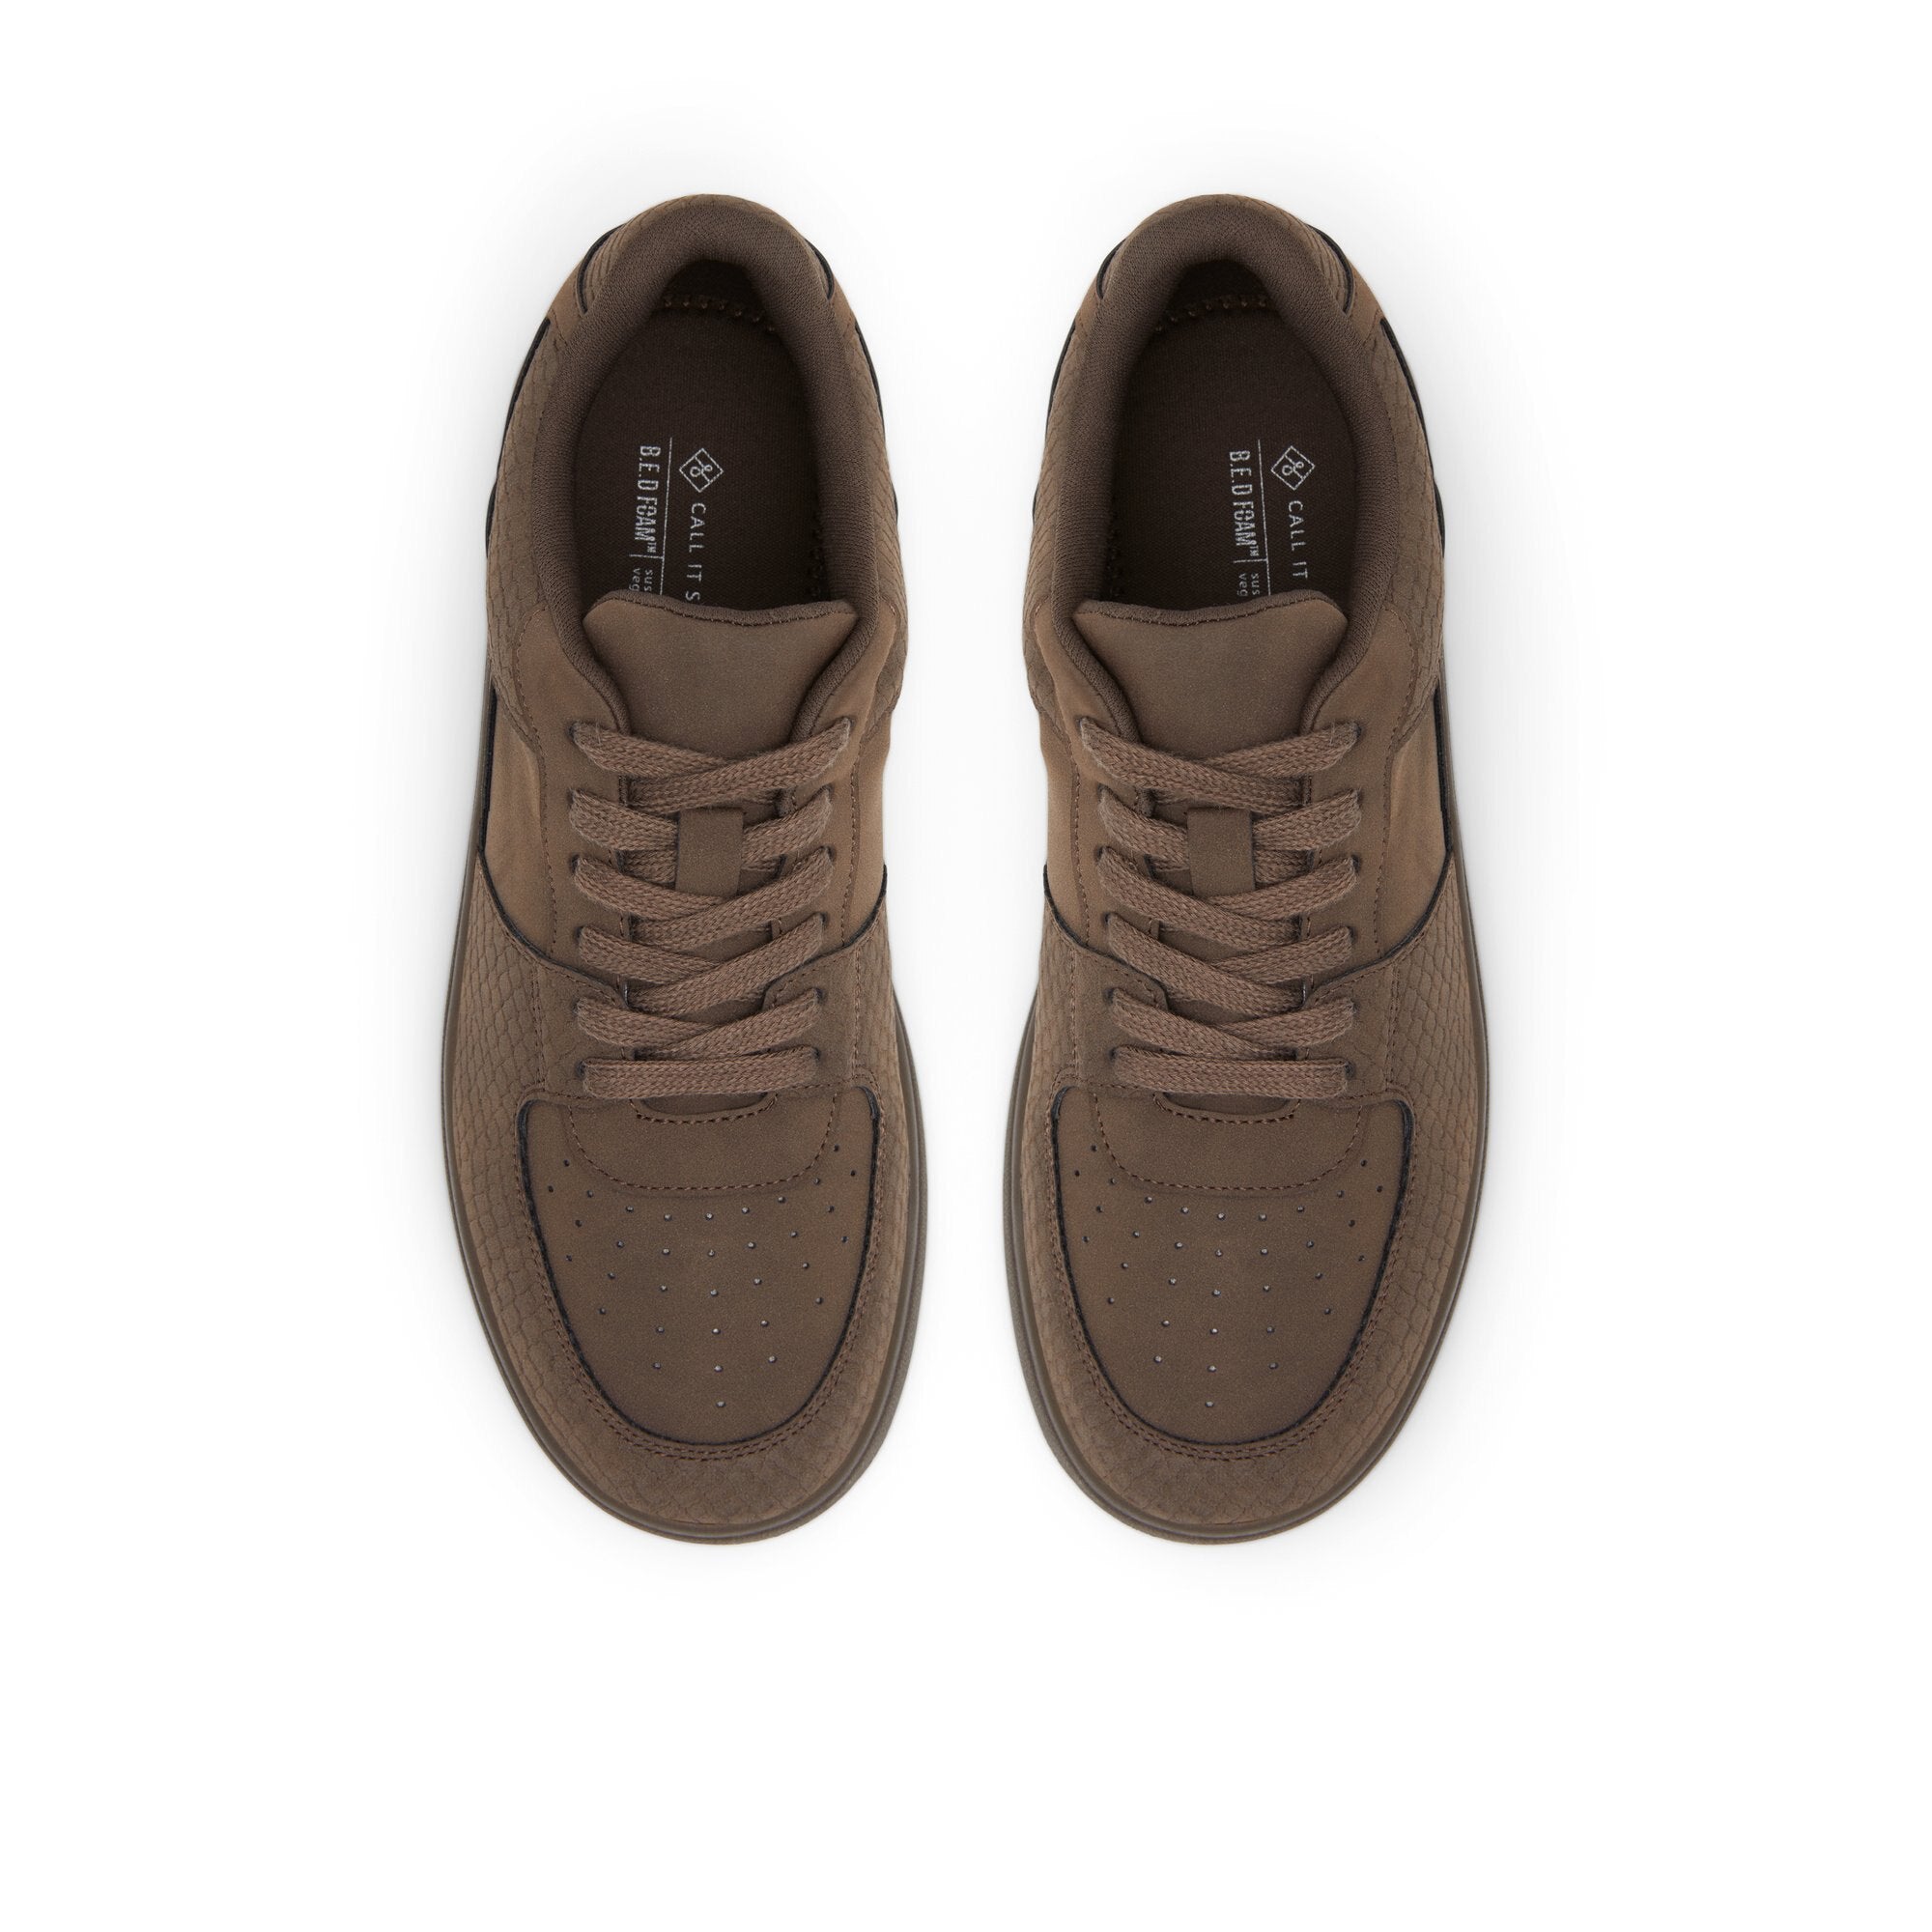 Fresh / Sneakers Women Shoes - Dark Brown - CALL IT SPRING KSA